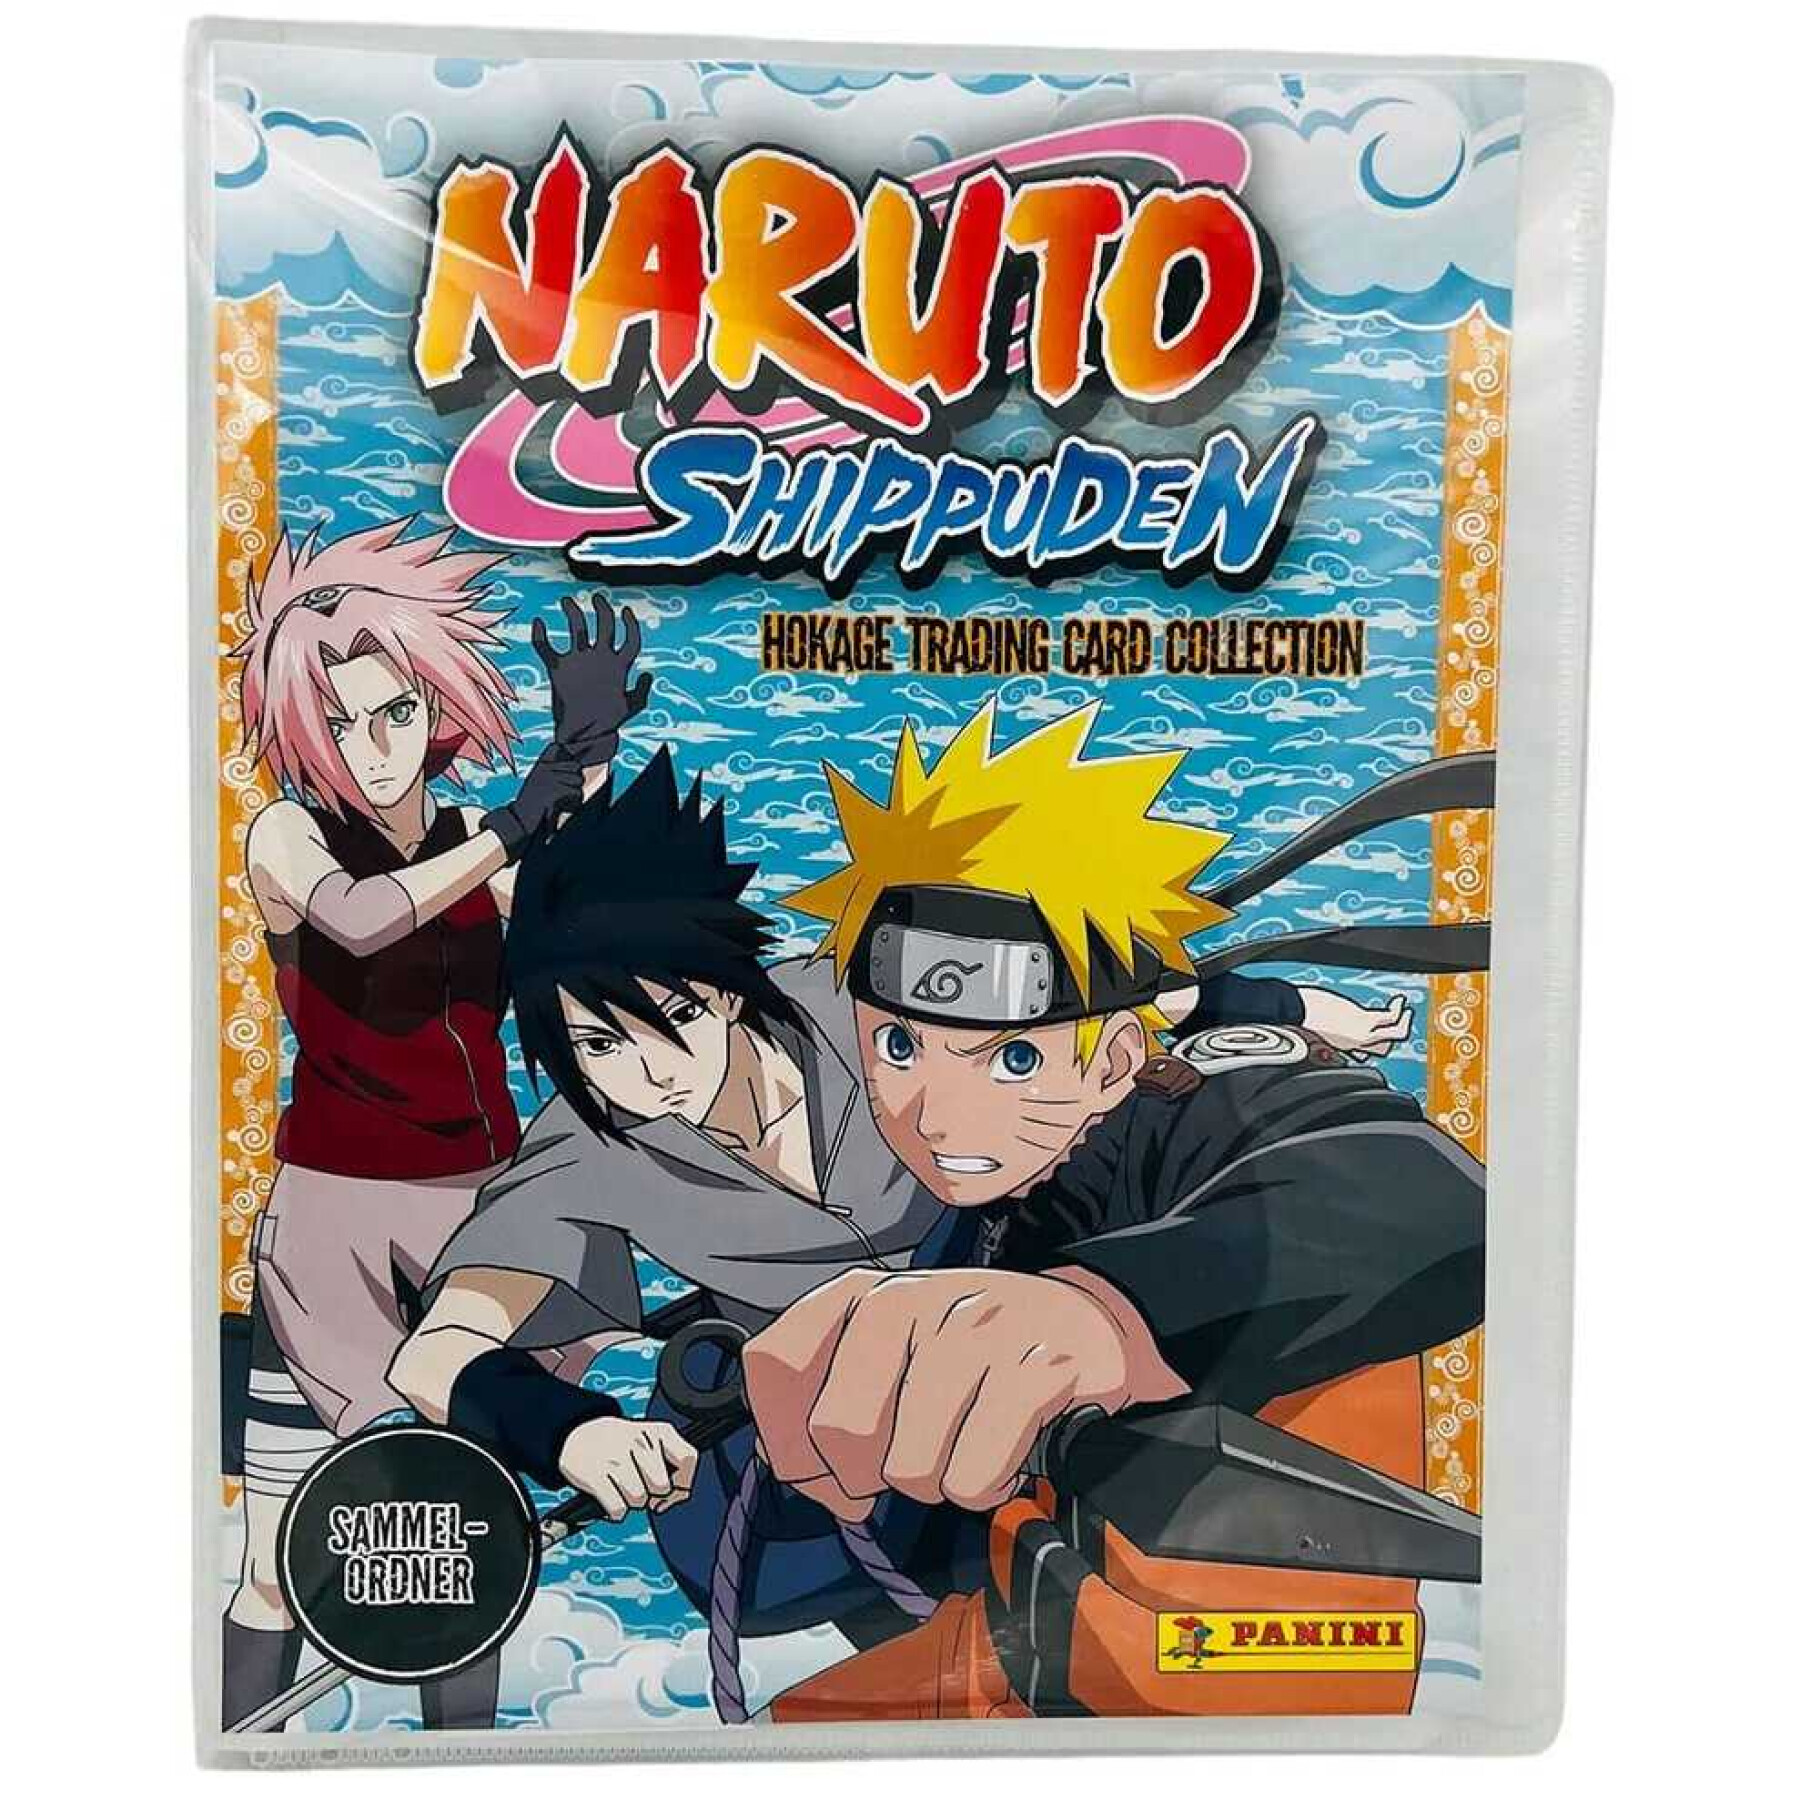 Trading card Panini Naruto Shippuden Hokage Trading Card Collection Starter Pack